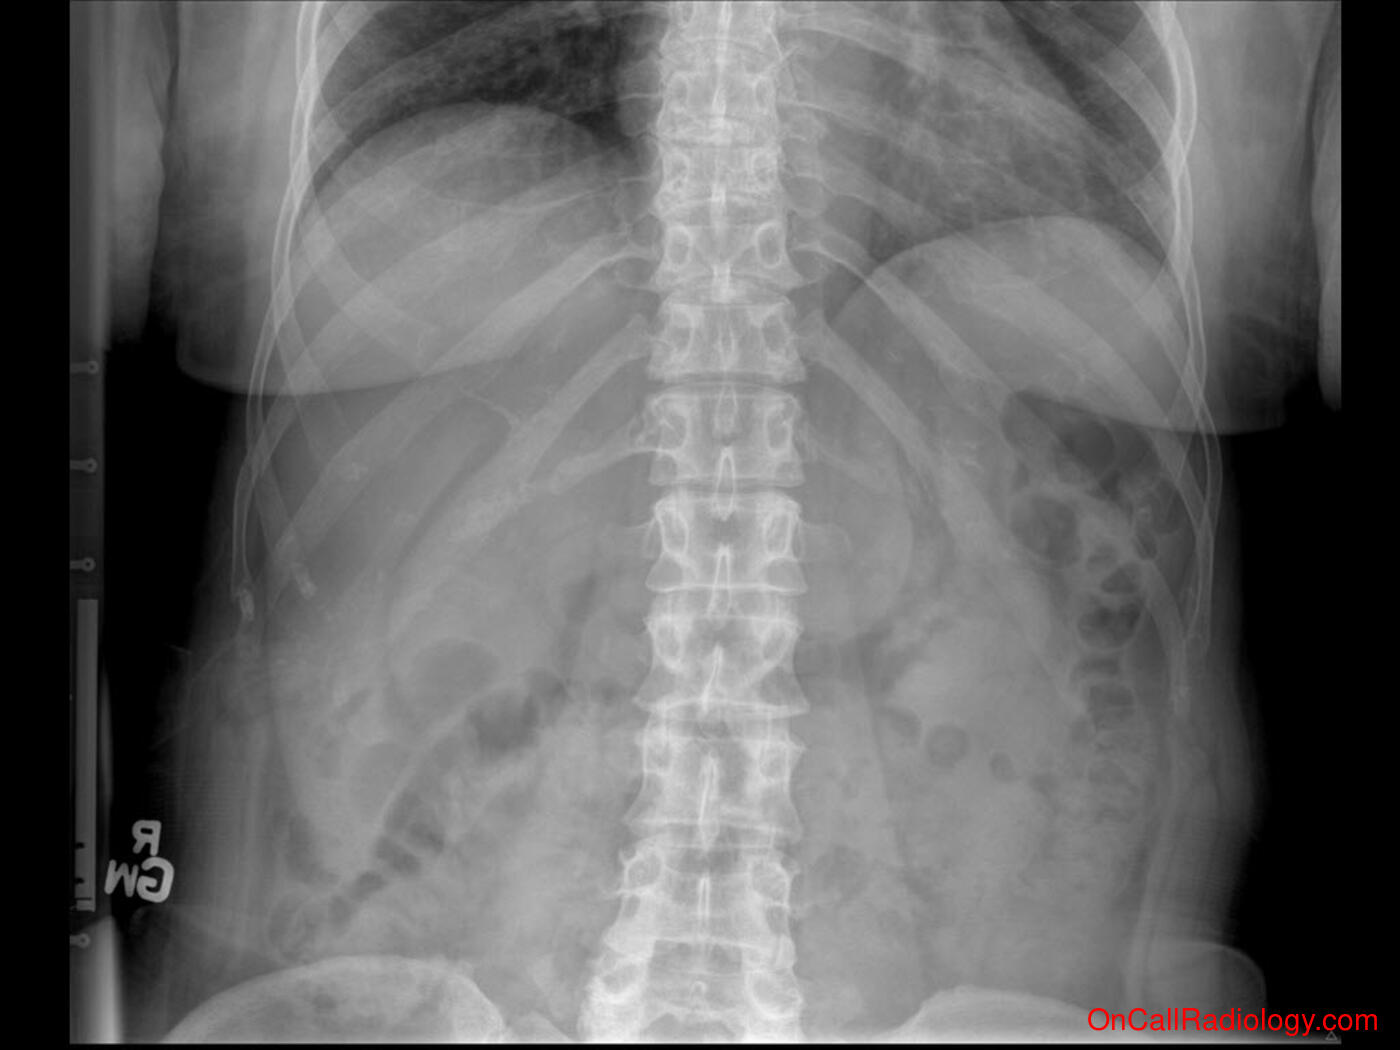 Bones (Rib fracture  - Plain film, Radiograph)